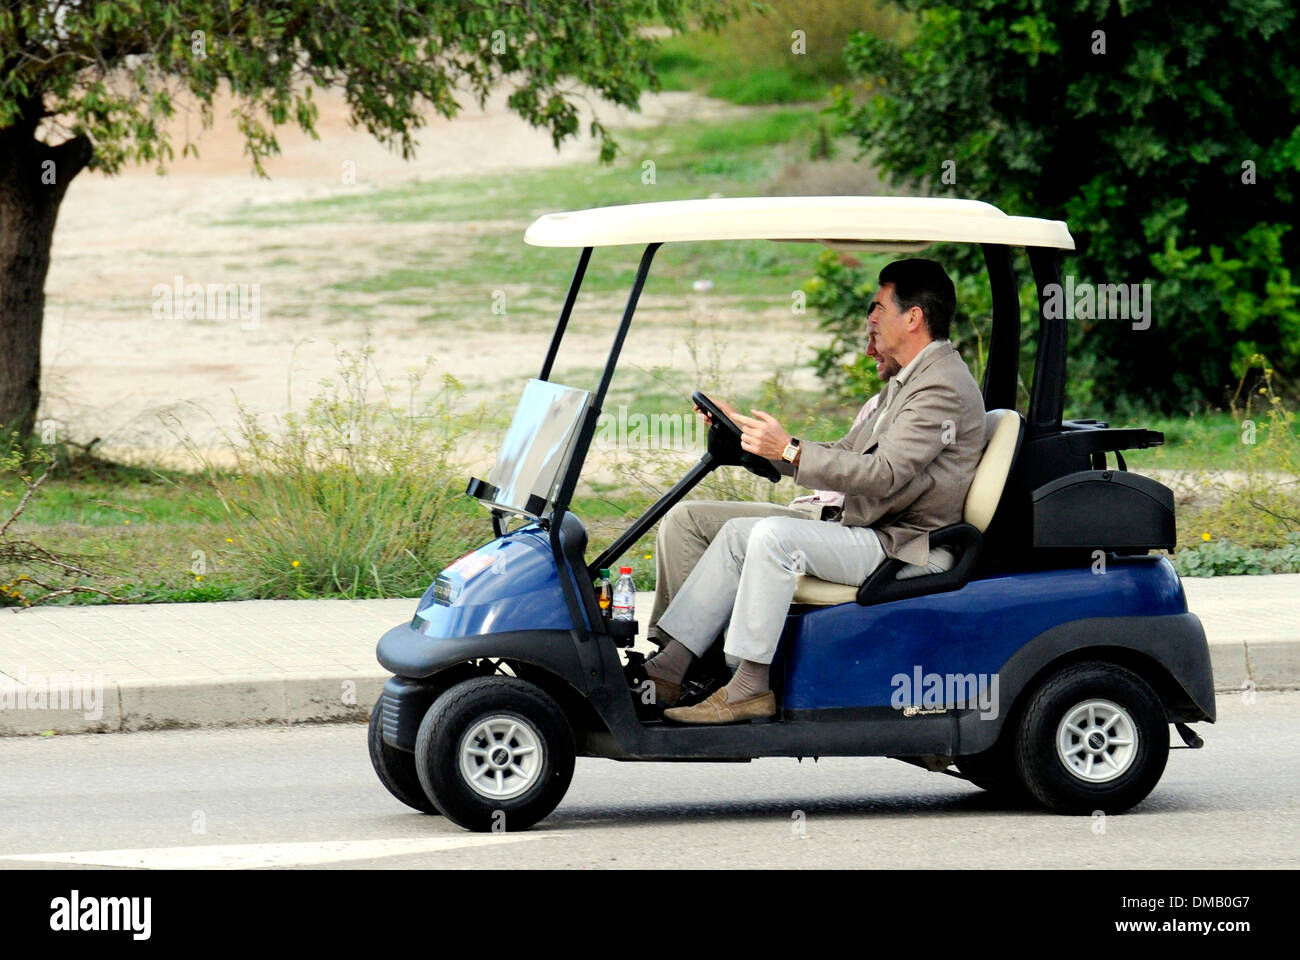 Pierce Brosnan se promener avec un chariot de golf à Majorque. Banque D'Images